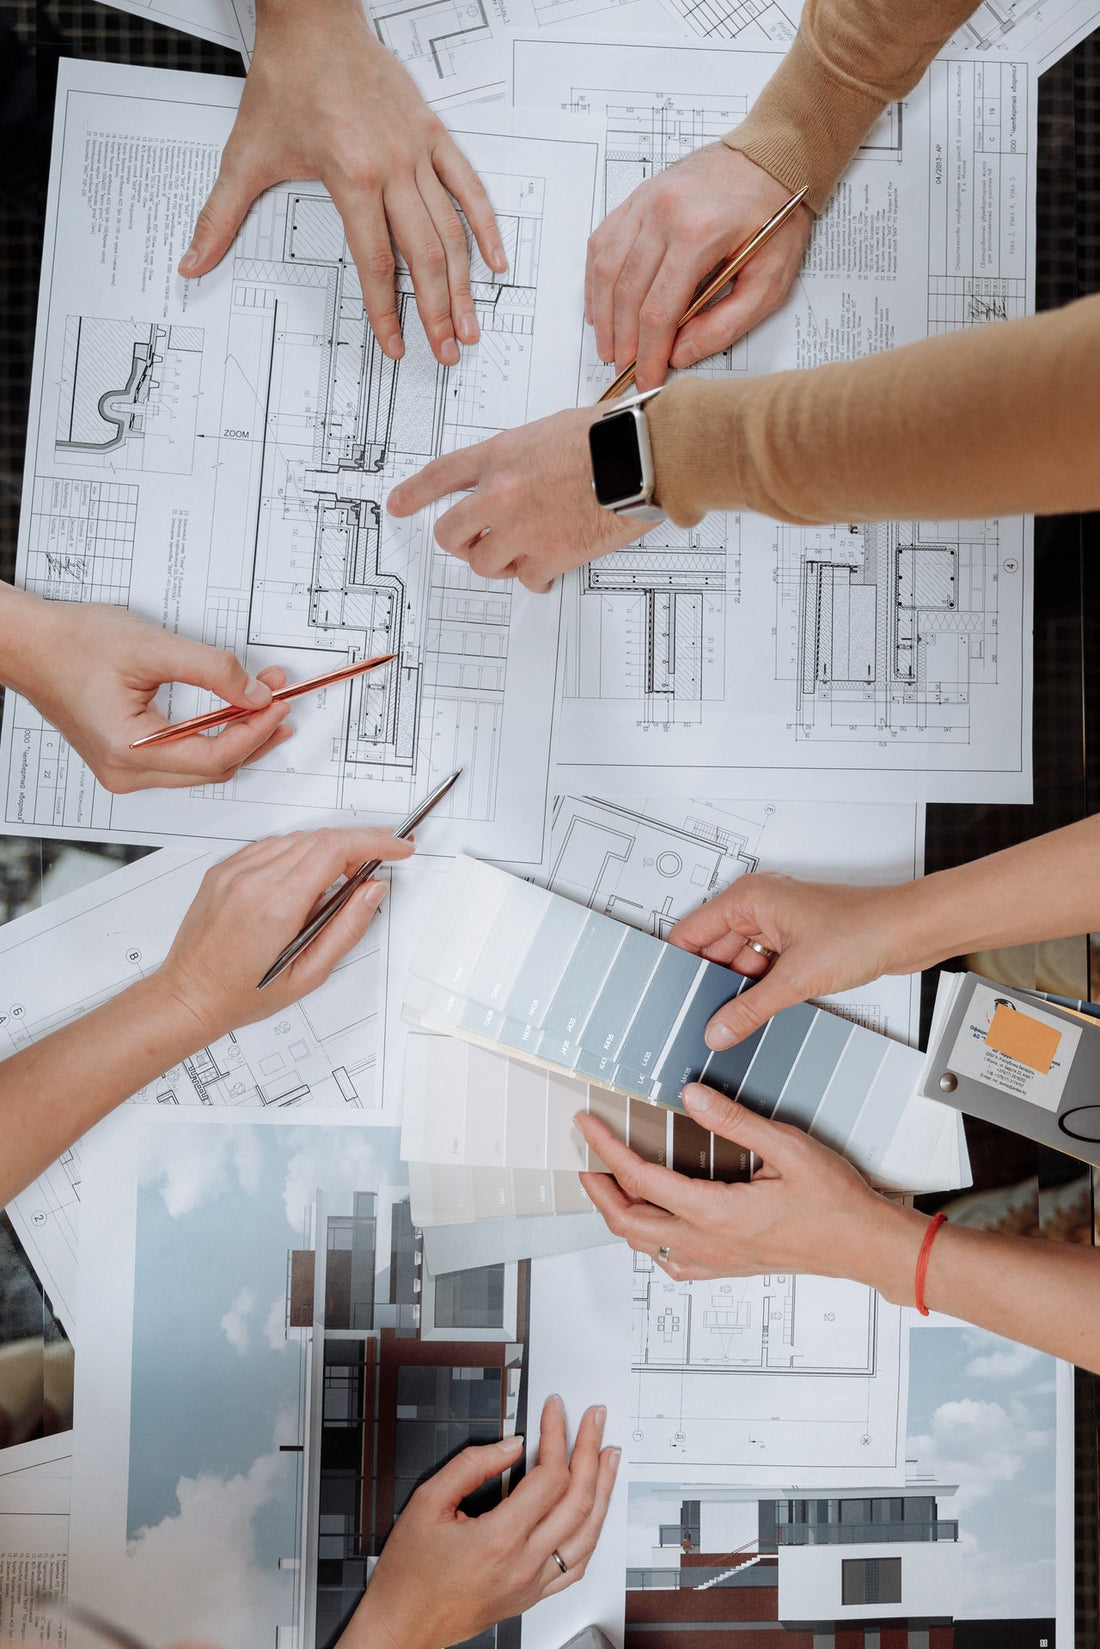 Do You Need An Interior Designer, Architect, Or Decorator?